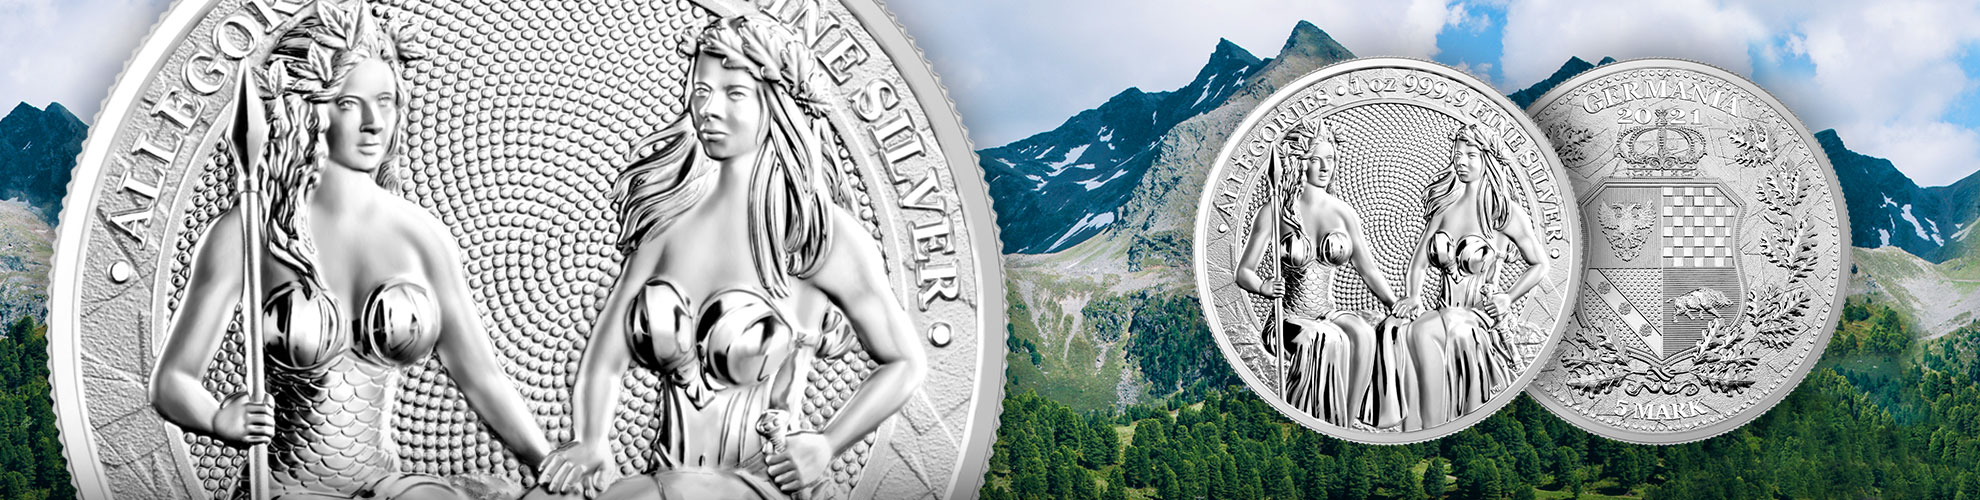 austria germania silver coin